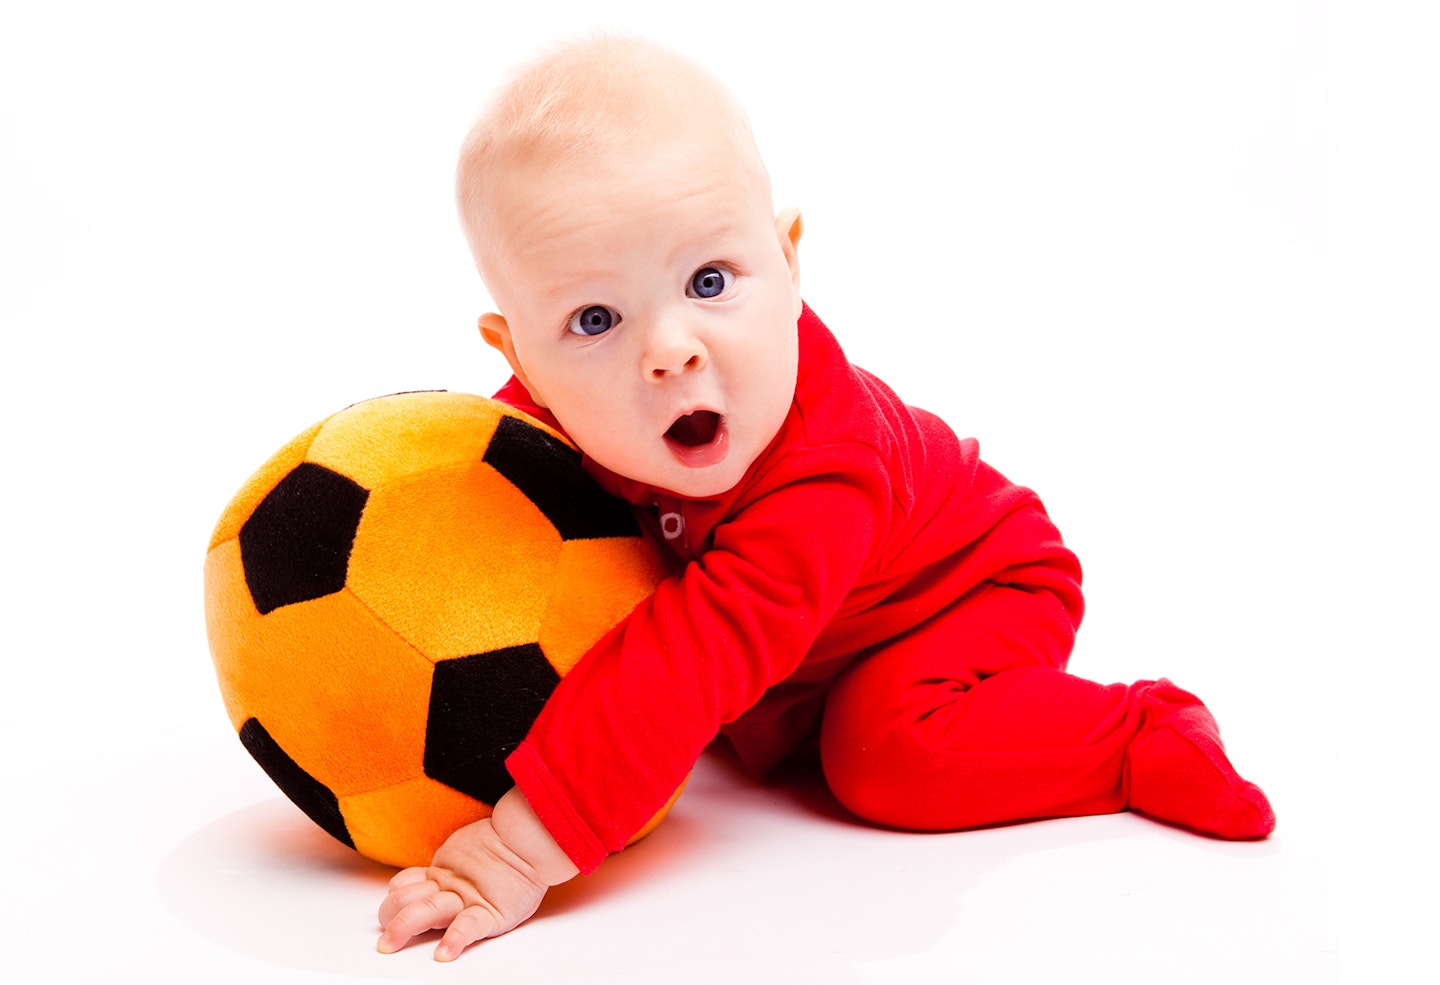 15 football-mad baby names